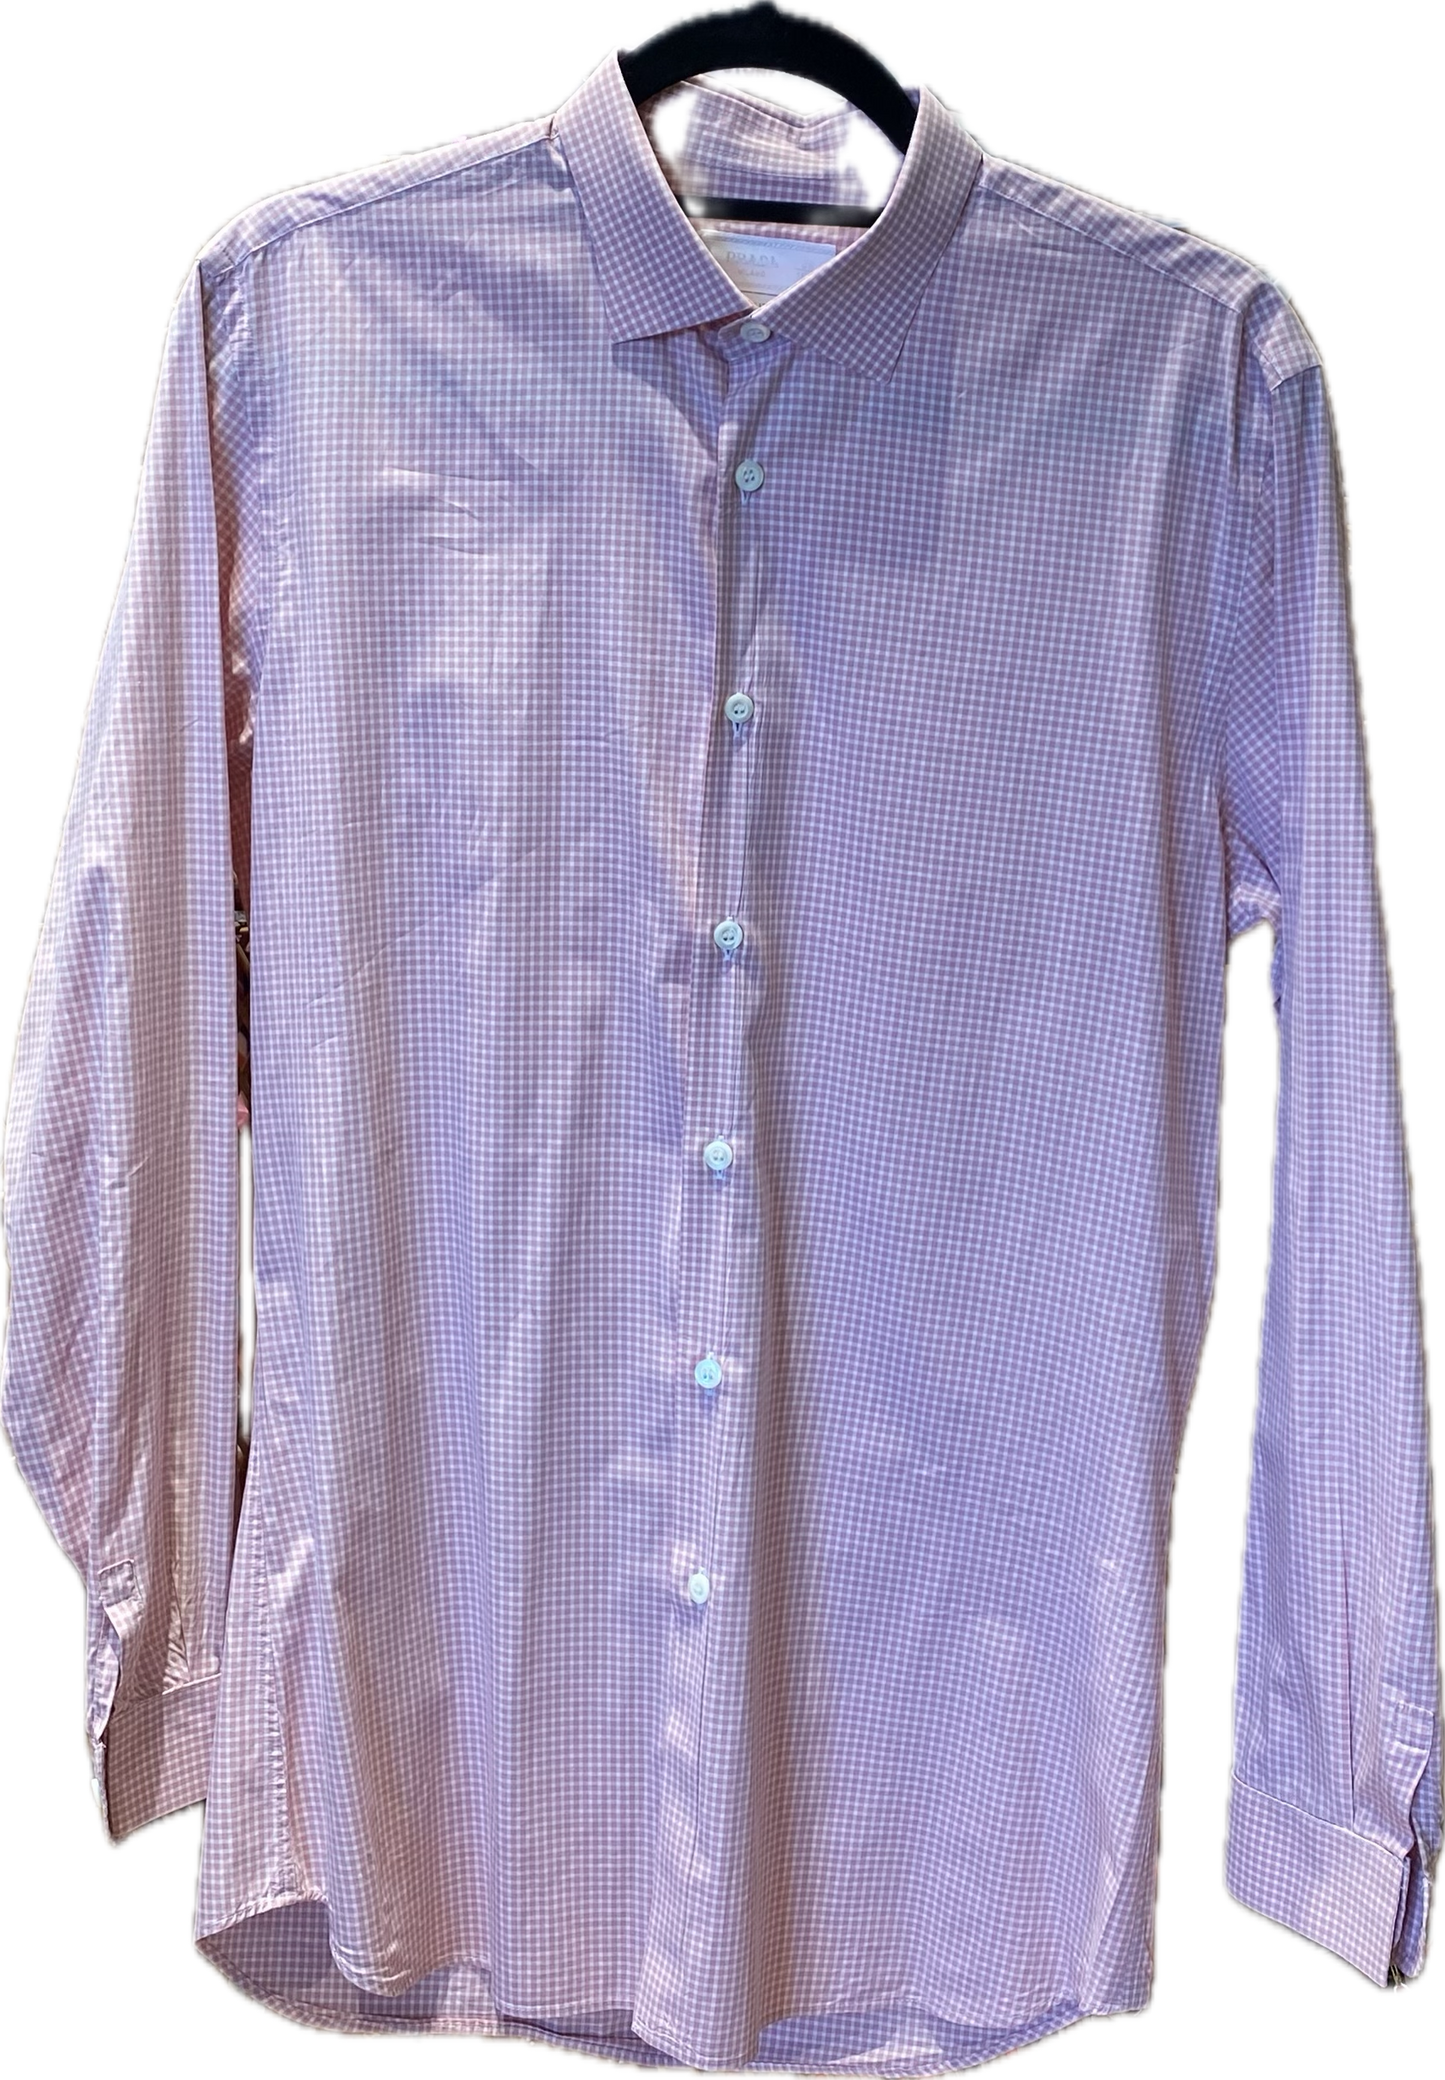 Prada Men's Pink & White Checked Cotton Stretch Shirt  No Flaws Size 15/39.5